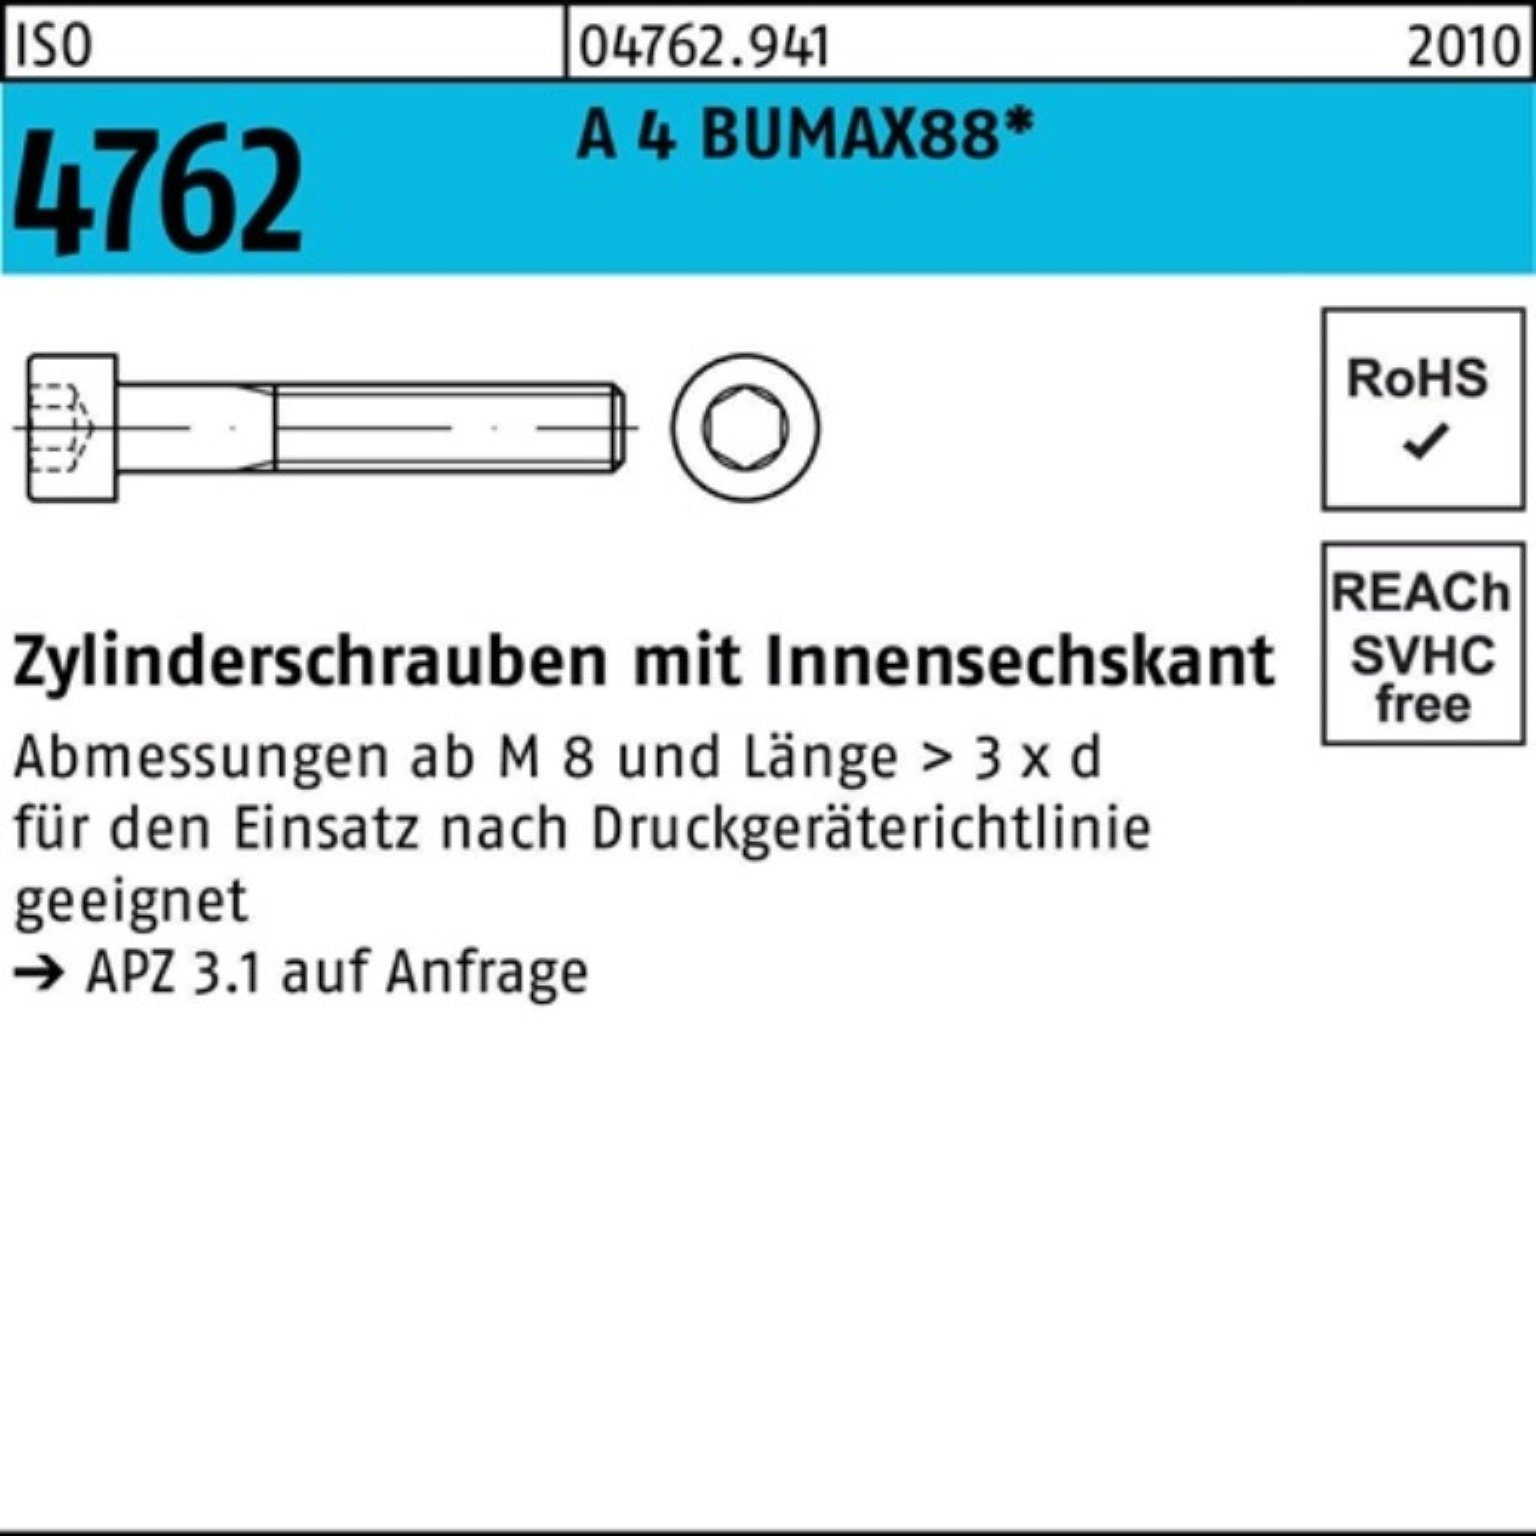 Bufab Zylinderschraube 100er Pack Zylinderschraube ISO 4762 Innen-6kt M8x 60 A 4 BUMAX88 50 S